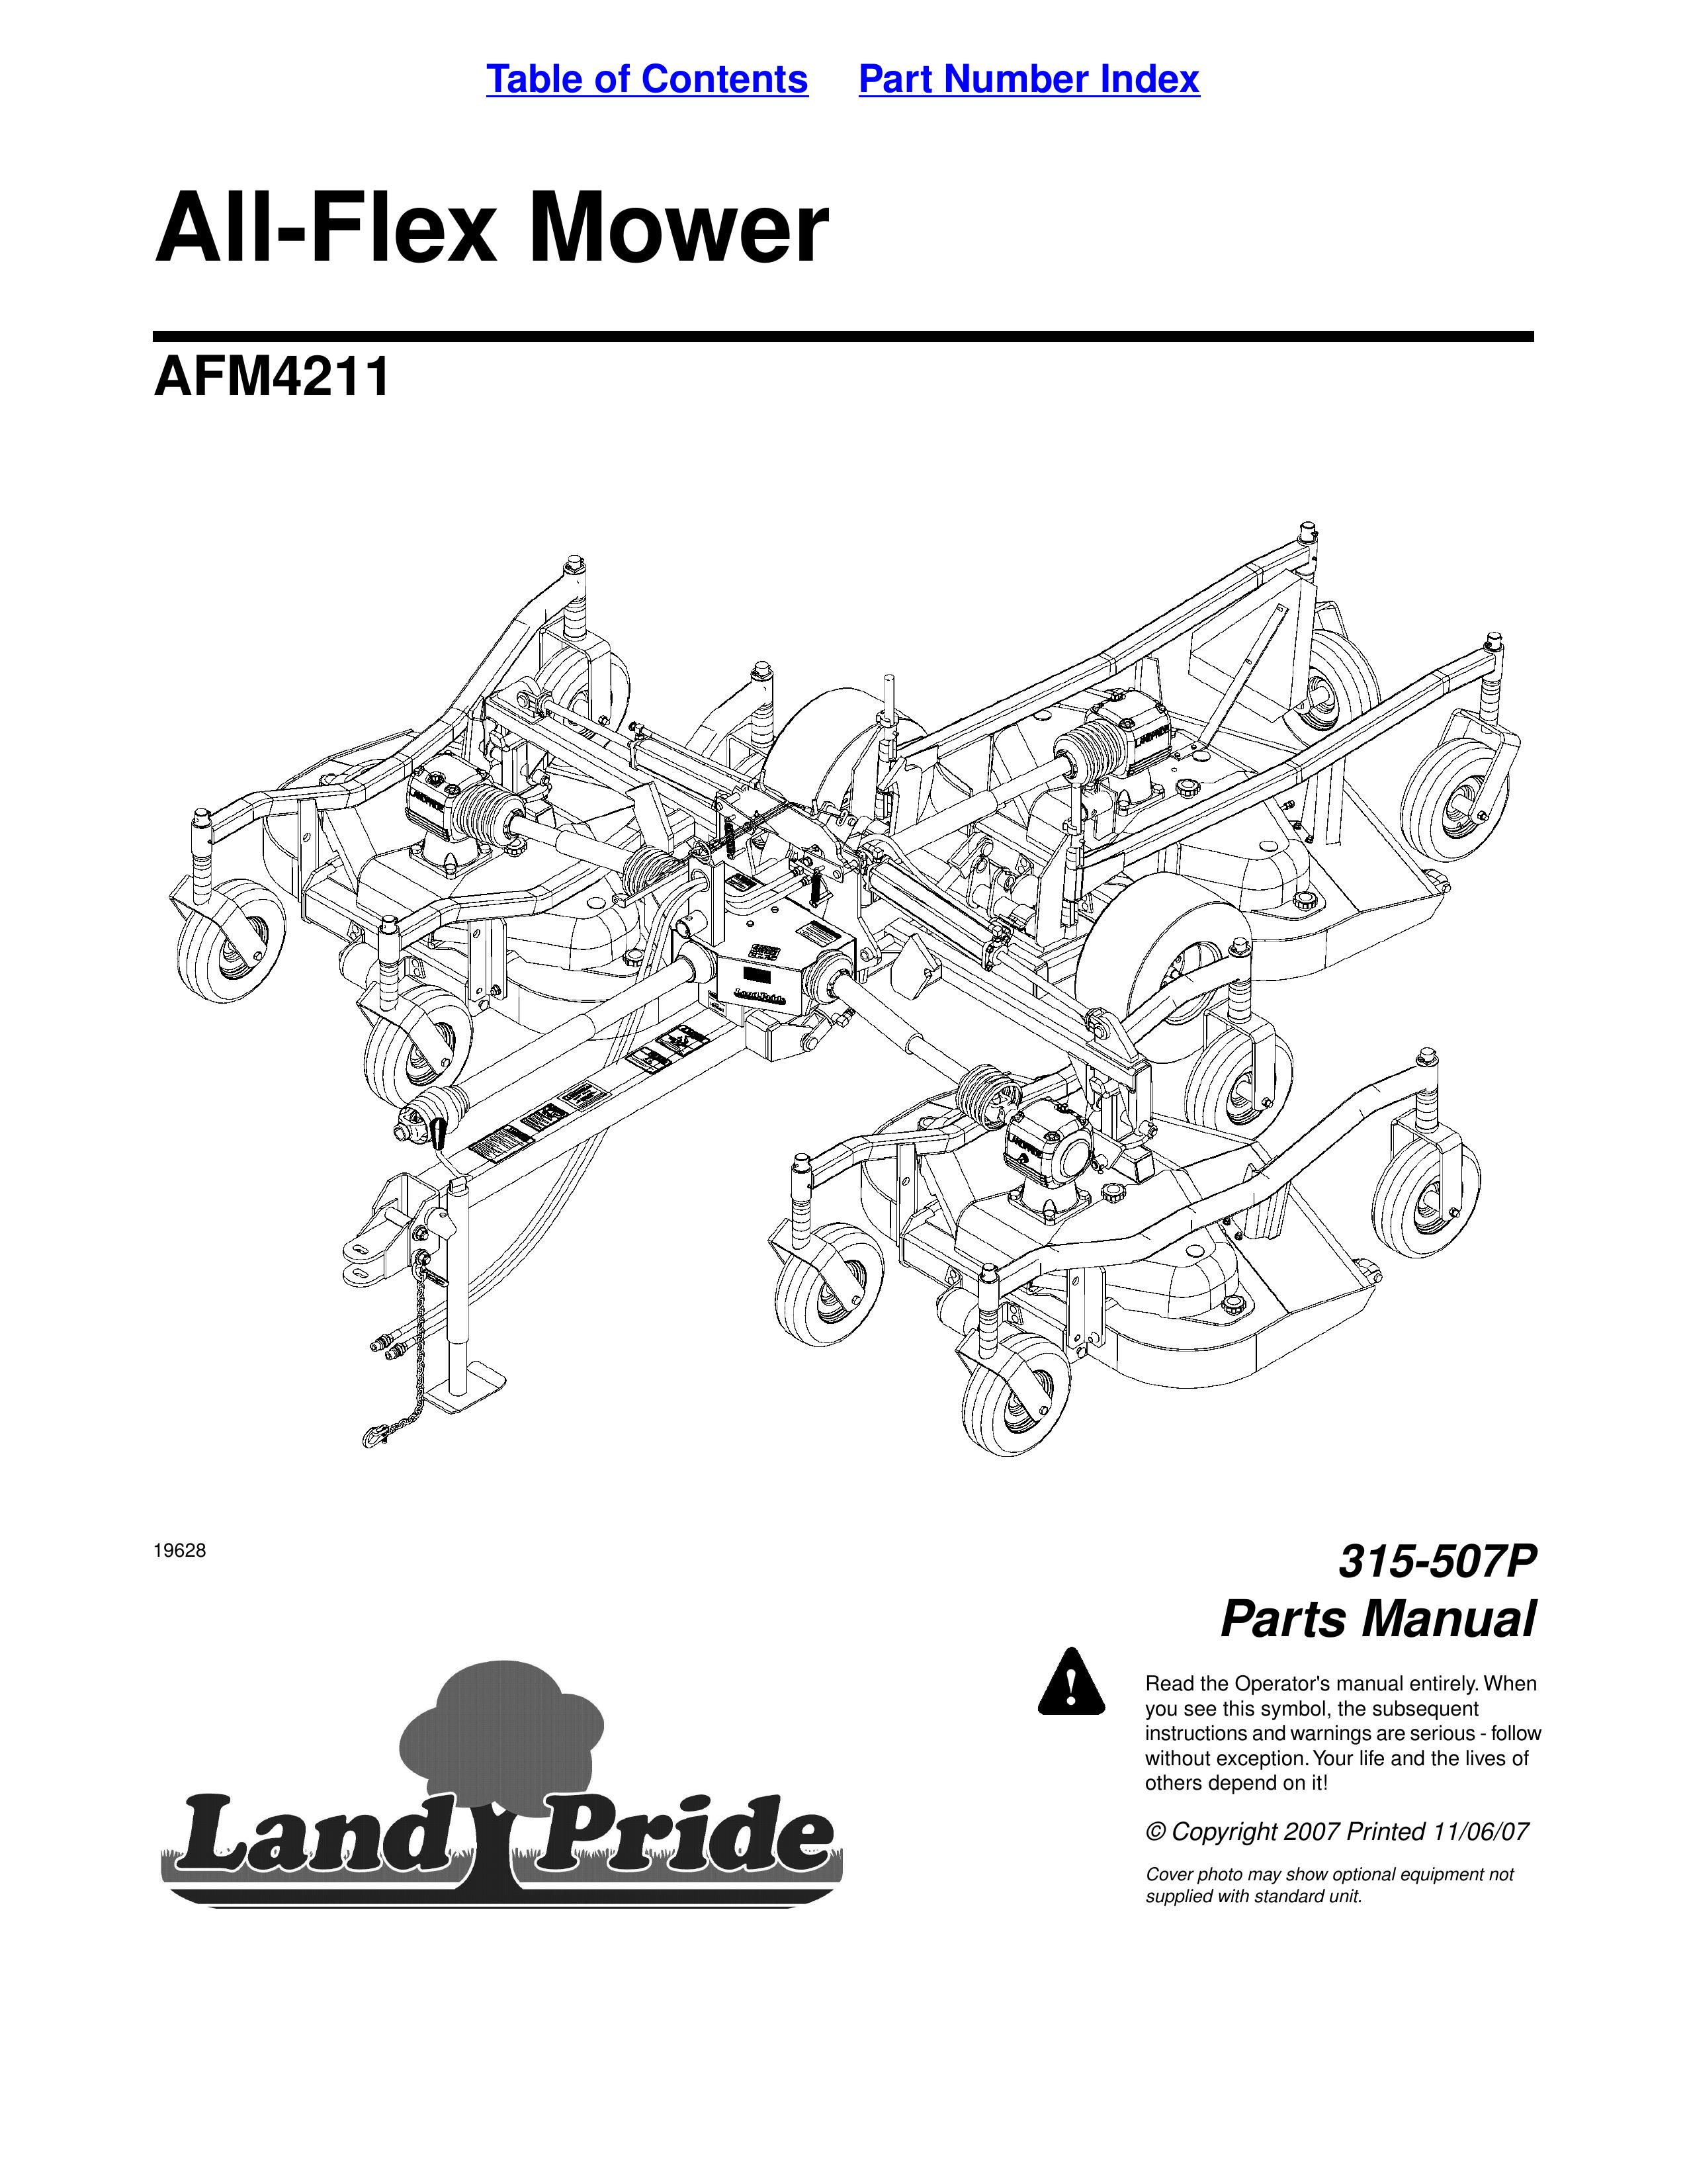 Land Pride AFM4211 Lawn Mower User Manual